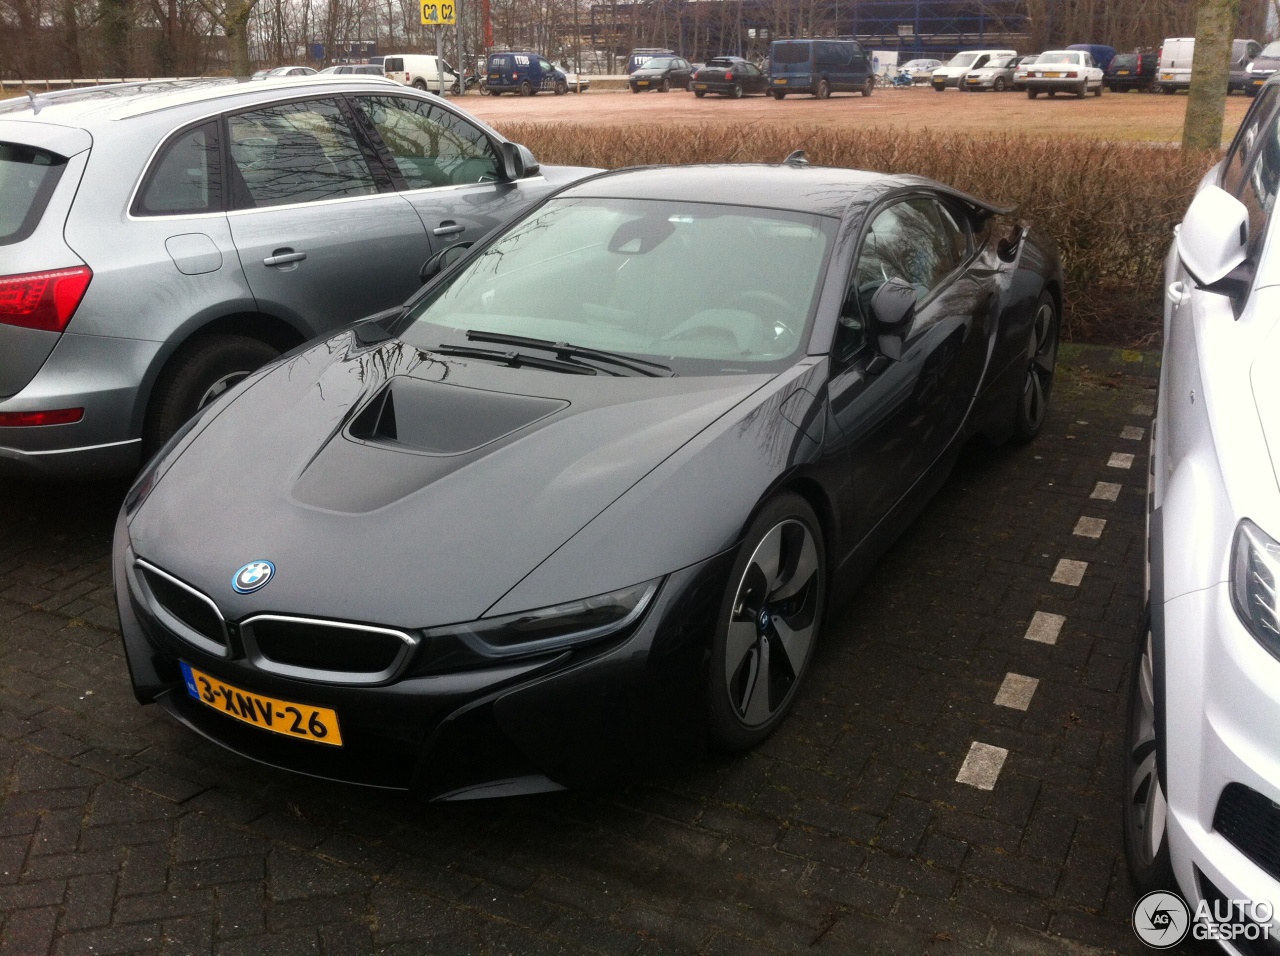 BMW i8 Carbon Edition